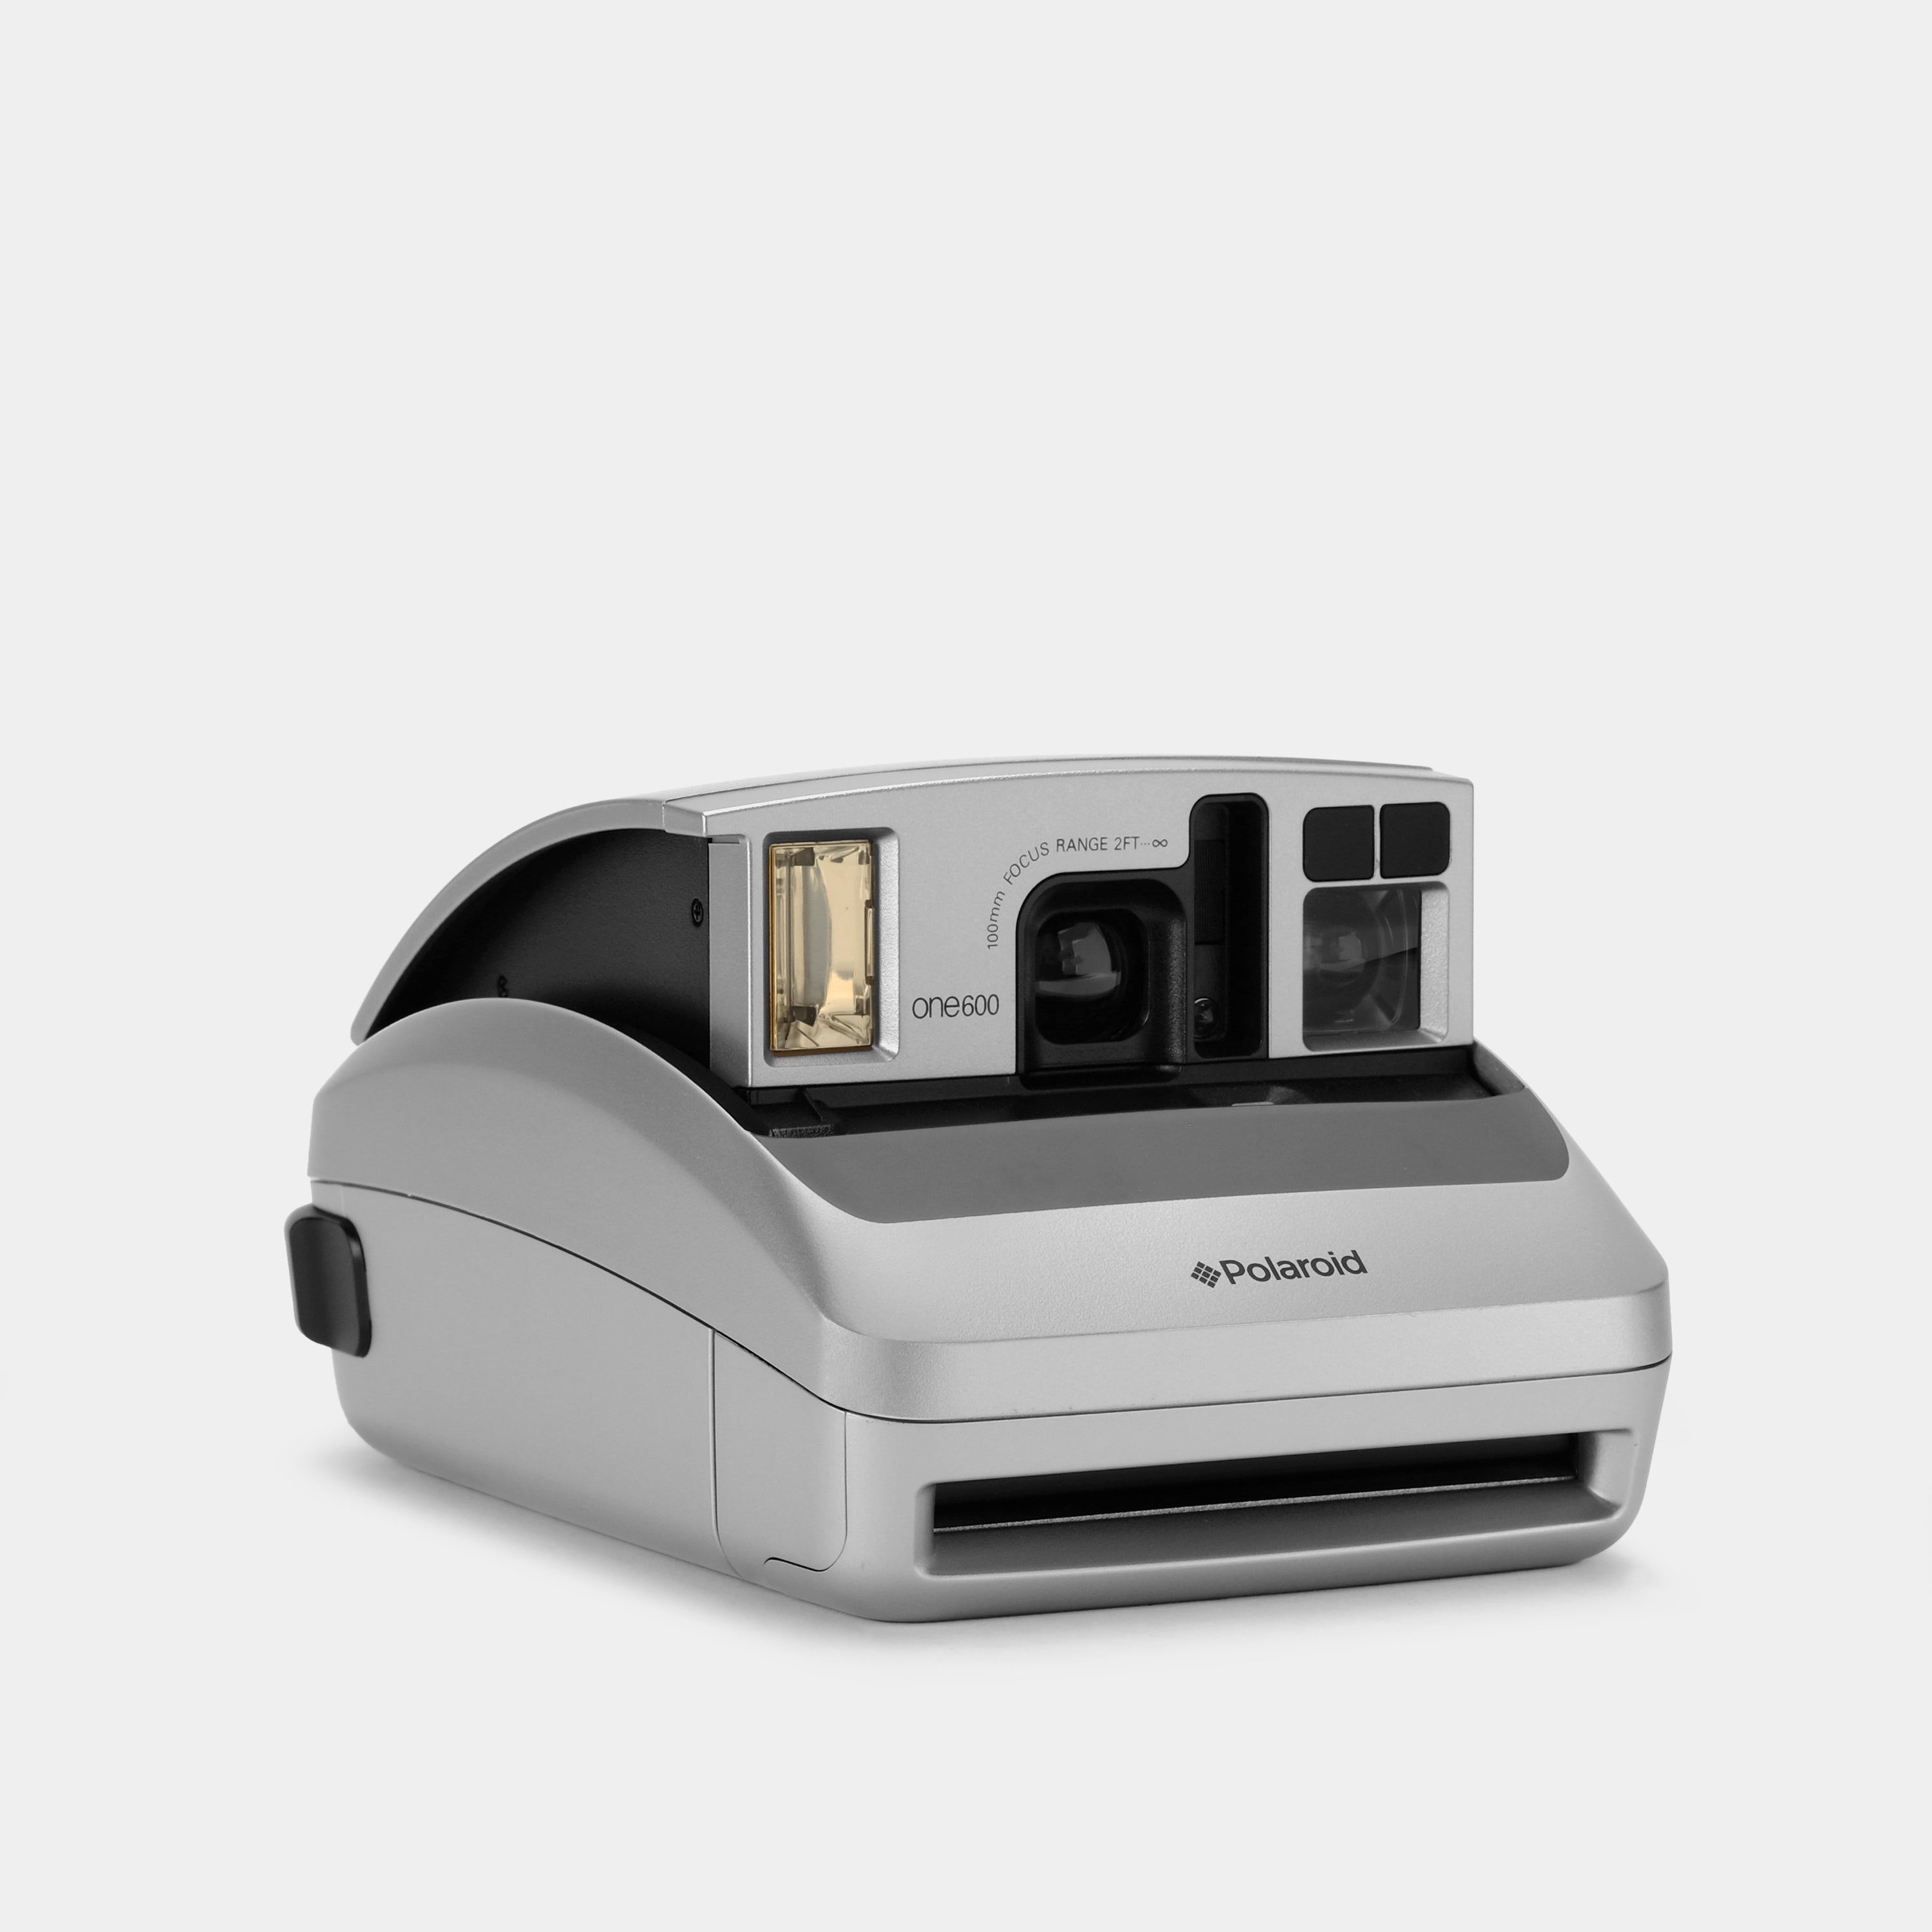 Polaroid 600 One600 Silver Instant Film Camera